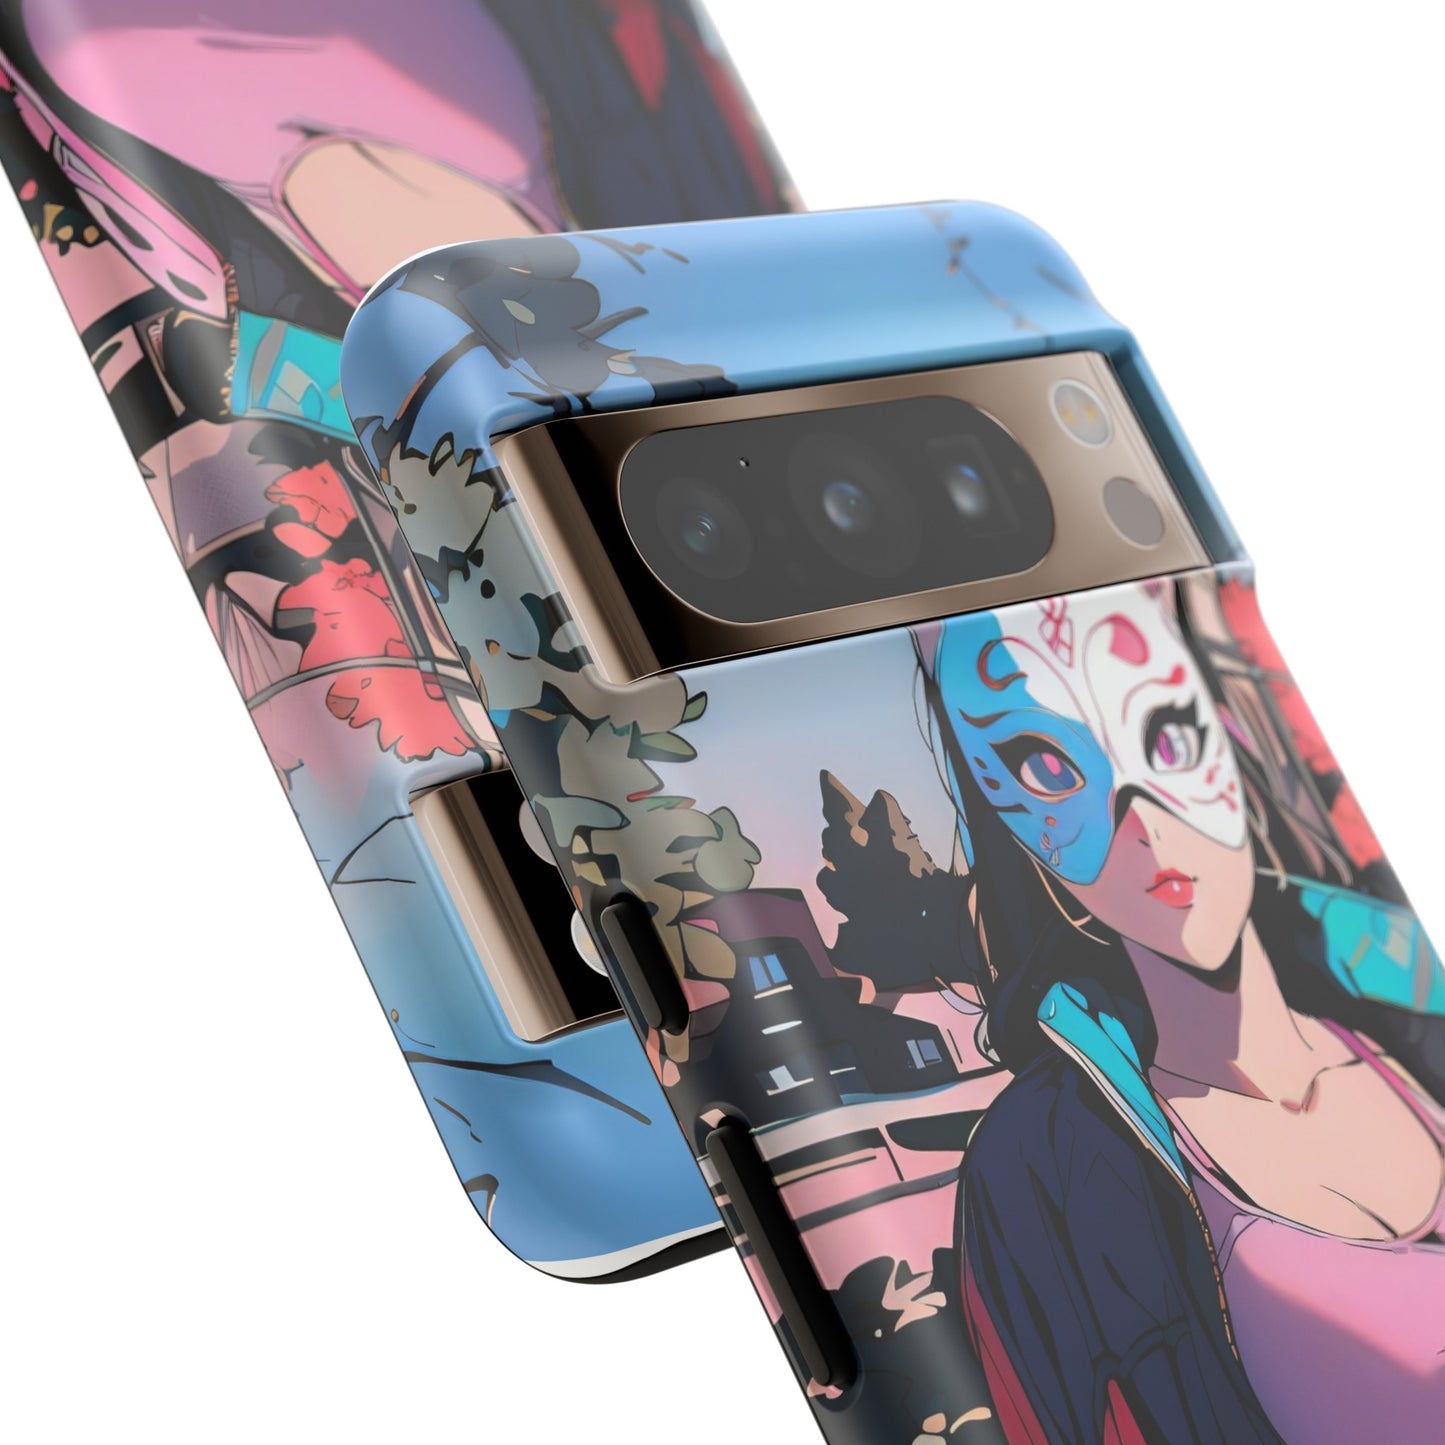 Anime Style Art Tough Cases- "Kitty City Boss #3"